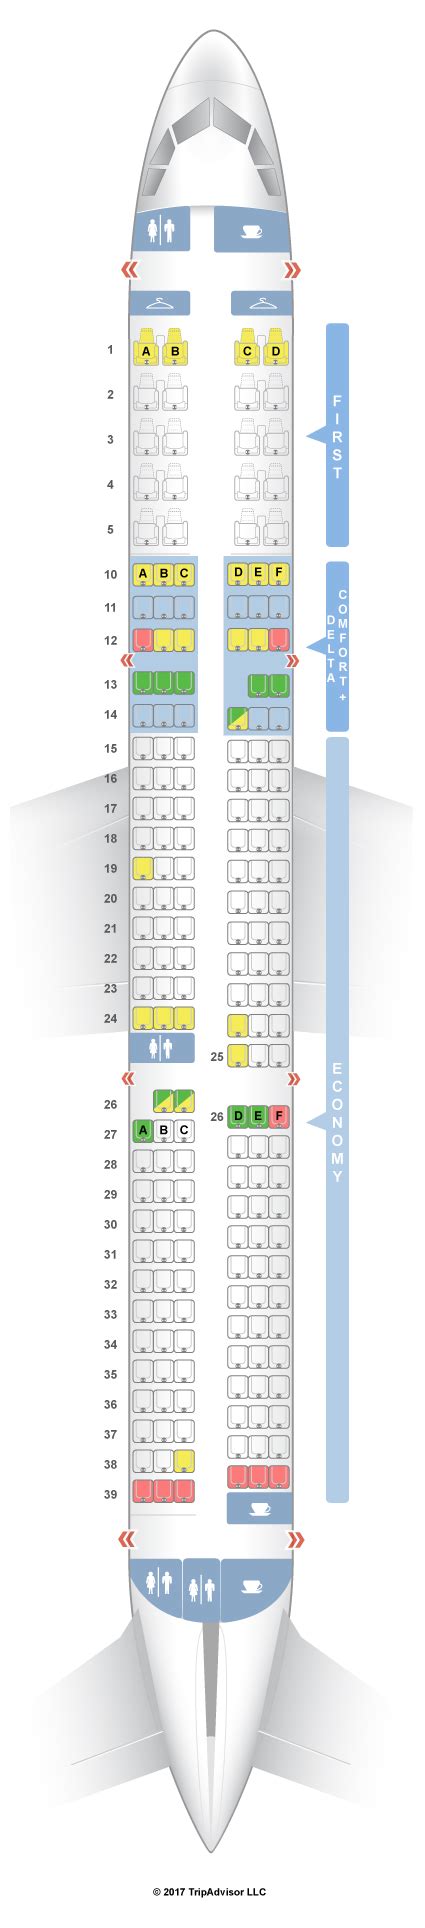 Airbus A321-200 (321) Layout 1 Seats: Business 16 | Eonomy 162. Airbus A321-200 (321) Layout 2 Seats: Business 16 | Economy 168. Airbus A321-200 (321) Layout 3 ... Delta; Garuda Indonesia; Kenya Airways; KLM; Korean Air; Middle East Airlines; Saudia; TAROM; Xiamen Airlines; Popular Destinations. Washington DC. Orlando. Chicago. Las Vegas. San .... 